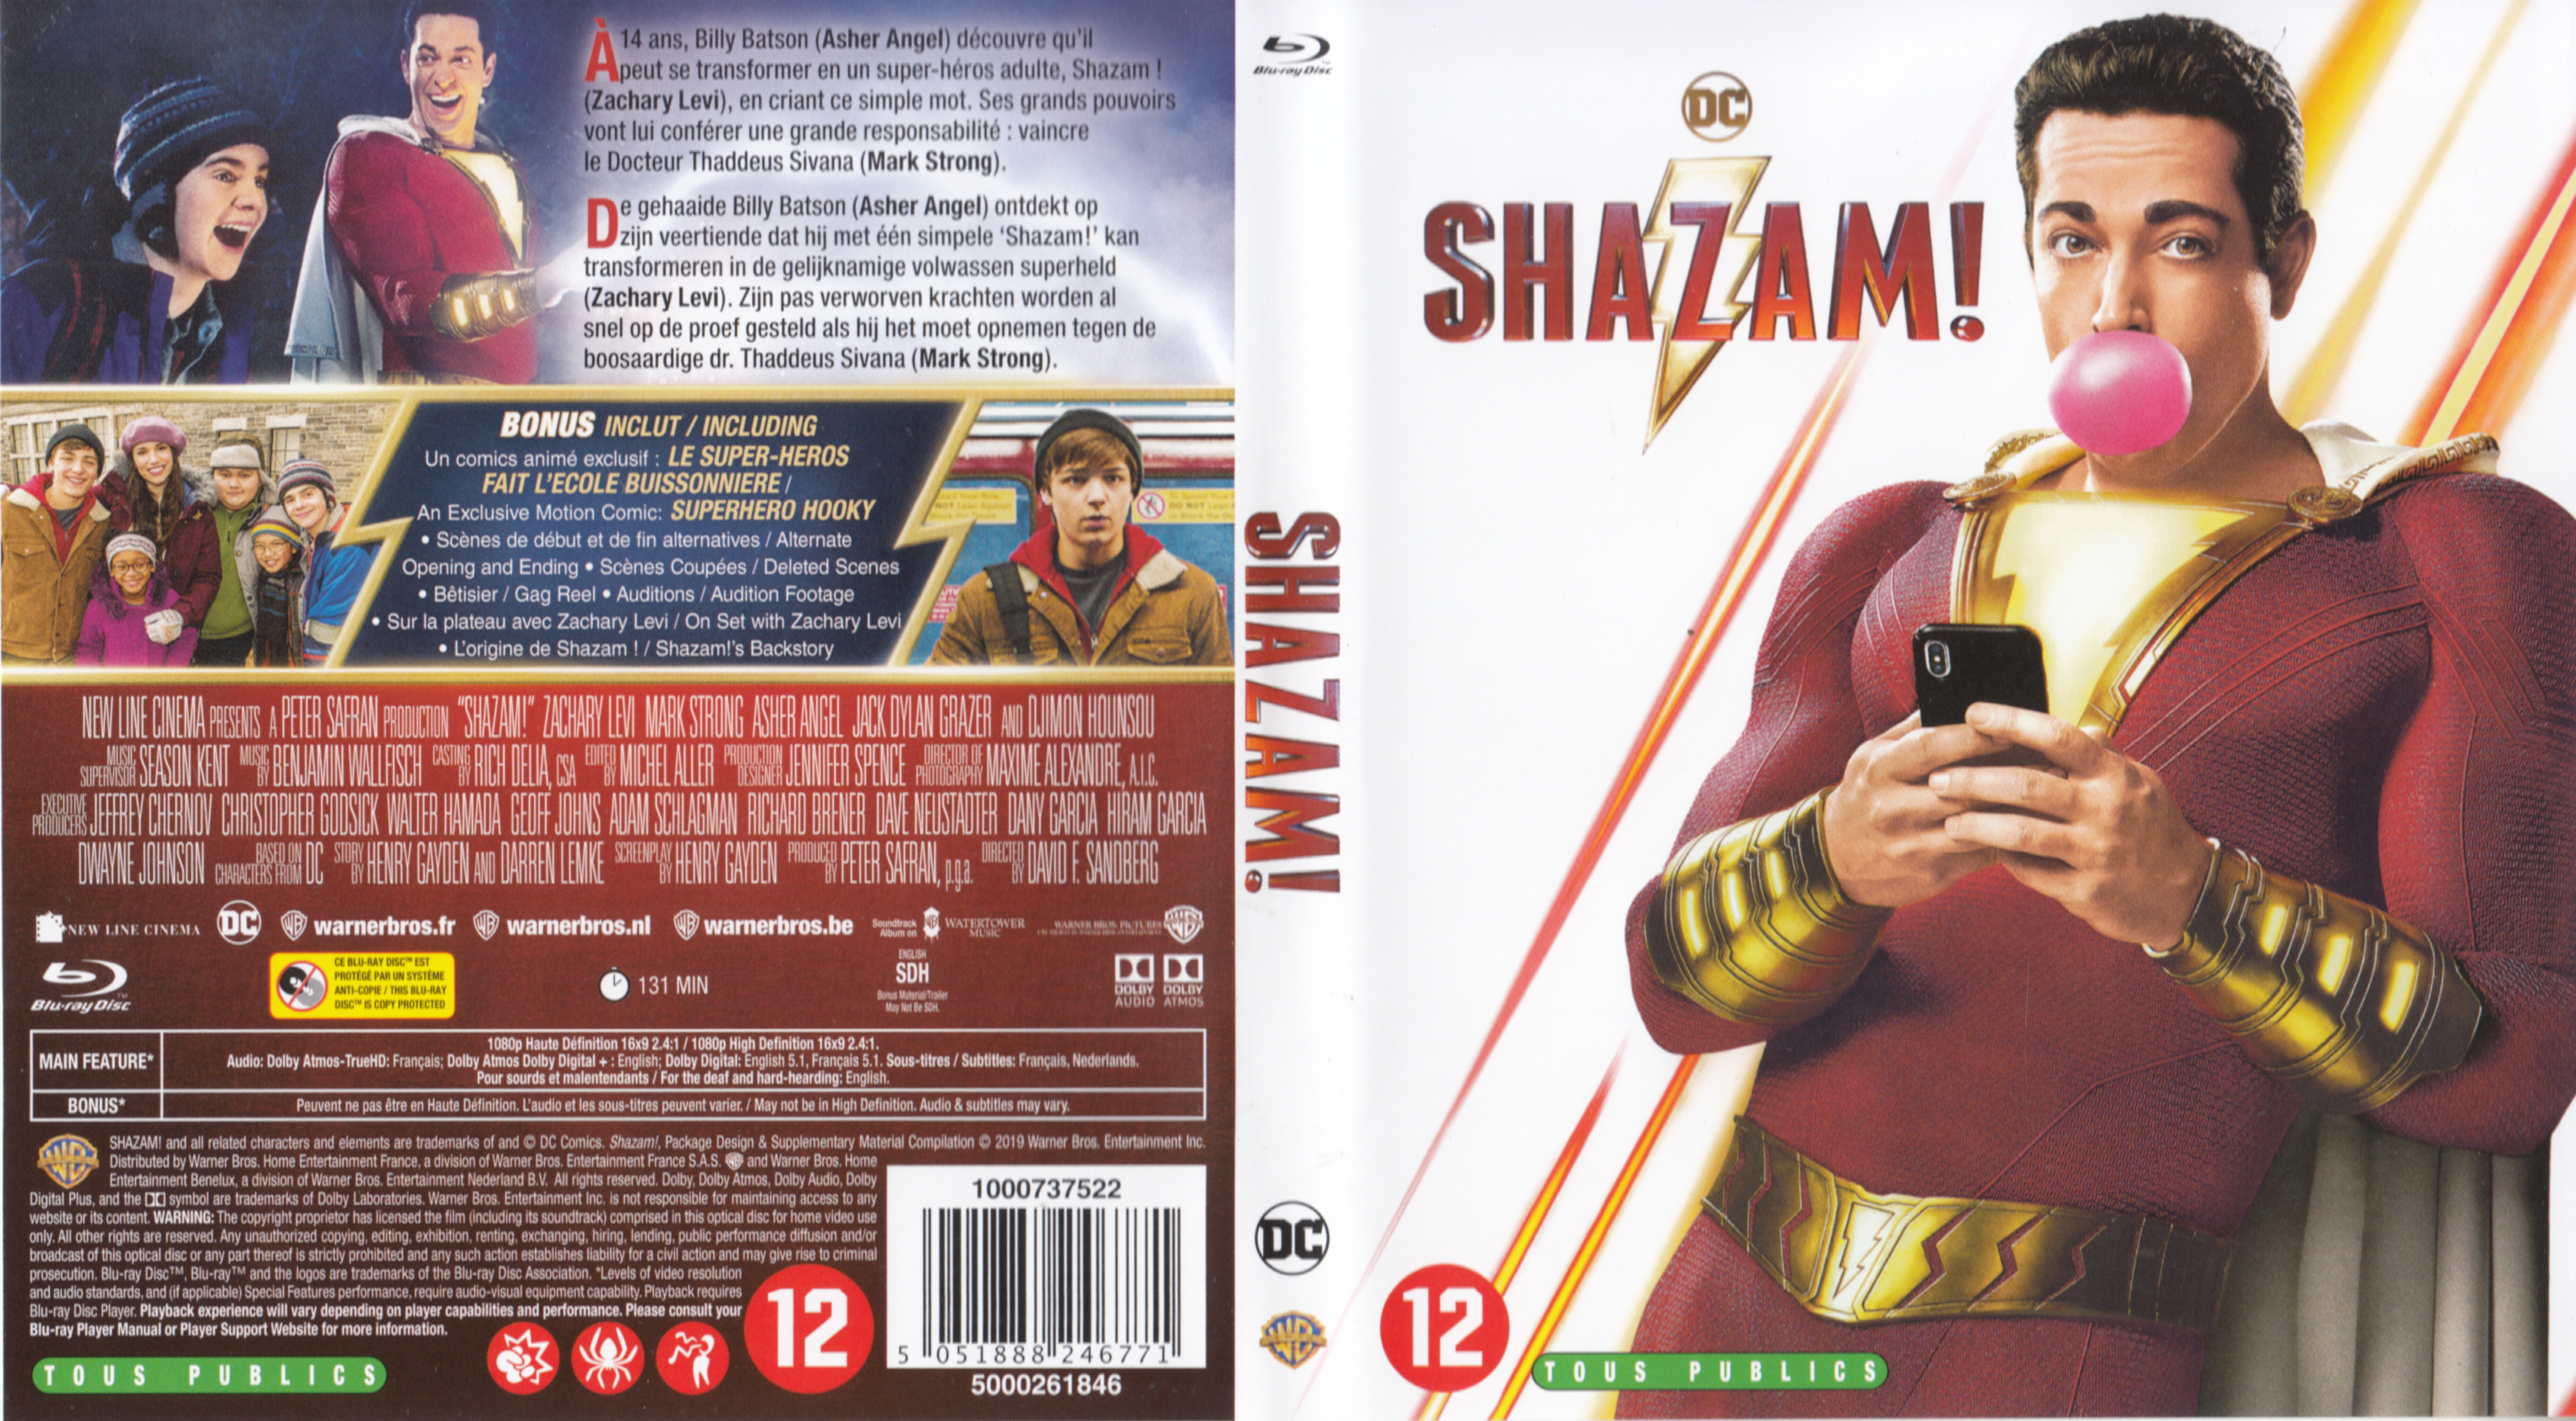 Jaquette DVD Shazam (BLU-RAY)